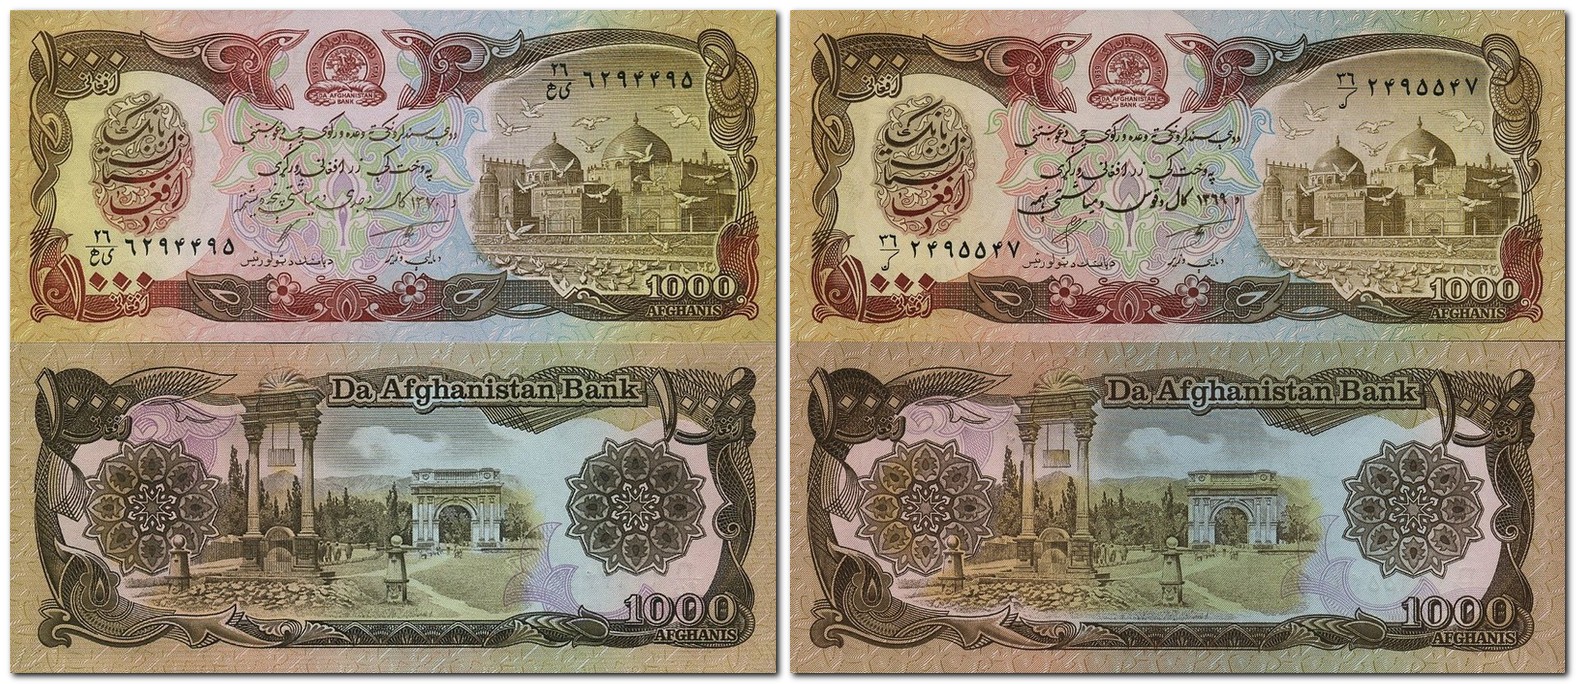 Монеты и купюры мира №60 - 1000 афгани (Афганистан)